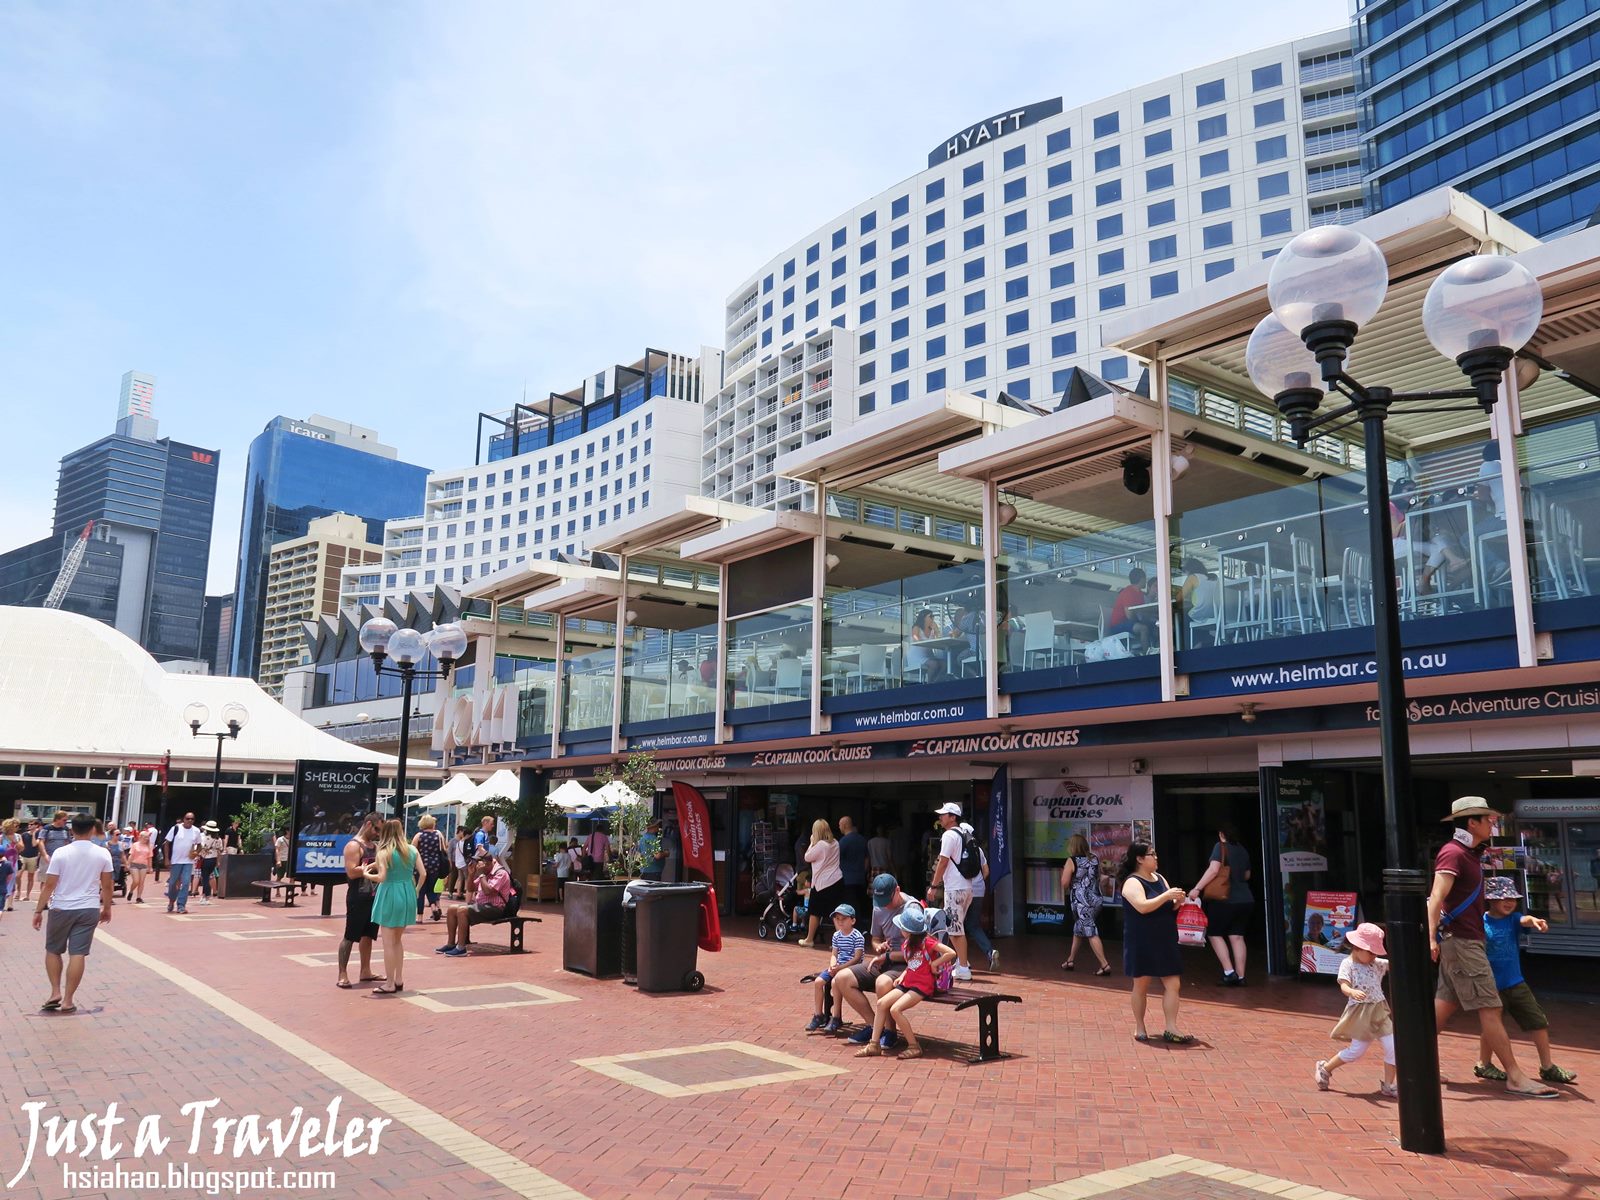 雪梨-景點-推薦-達令港-自由行-行程-旅遊-澳洲-Sydney-Darling-Harbour-Tourist-Attraction-Travel